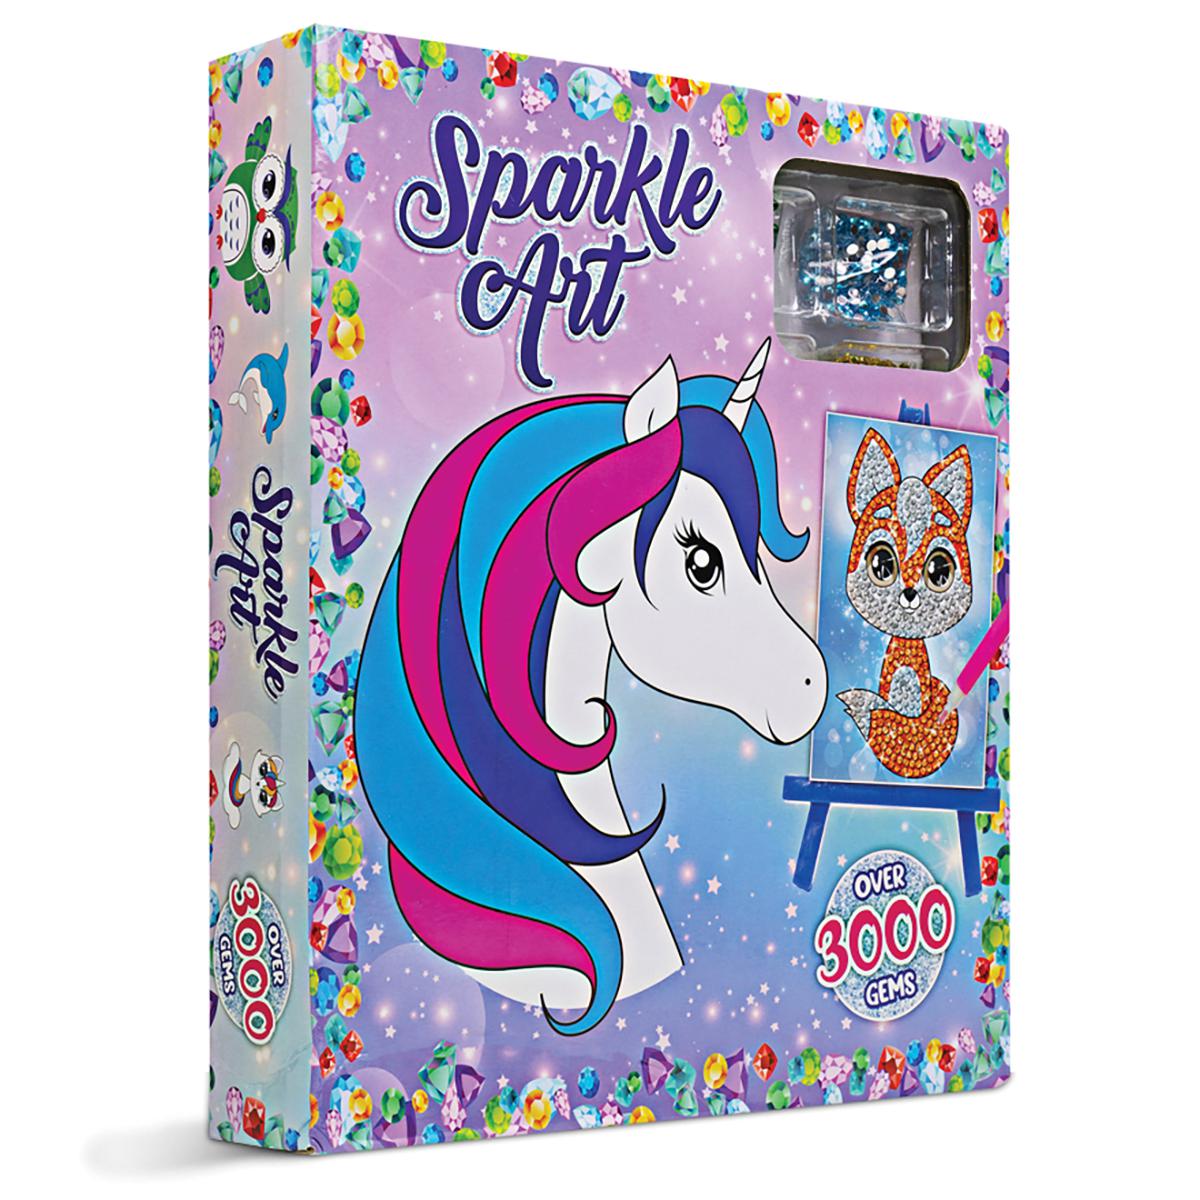  Diamond Sparkle Art Kit 